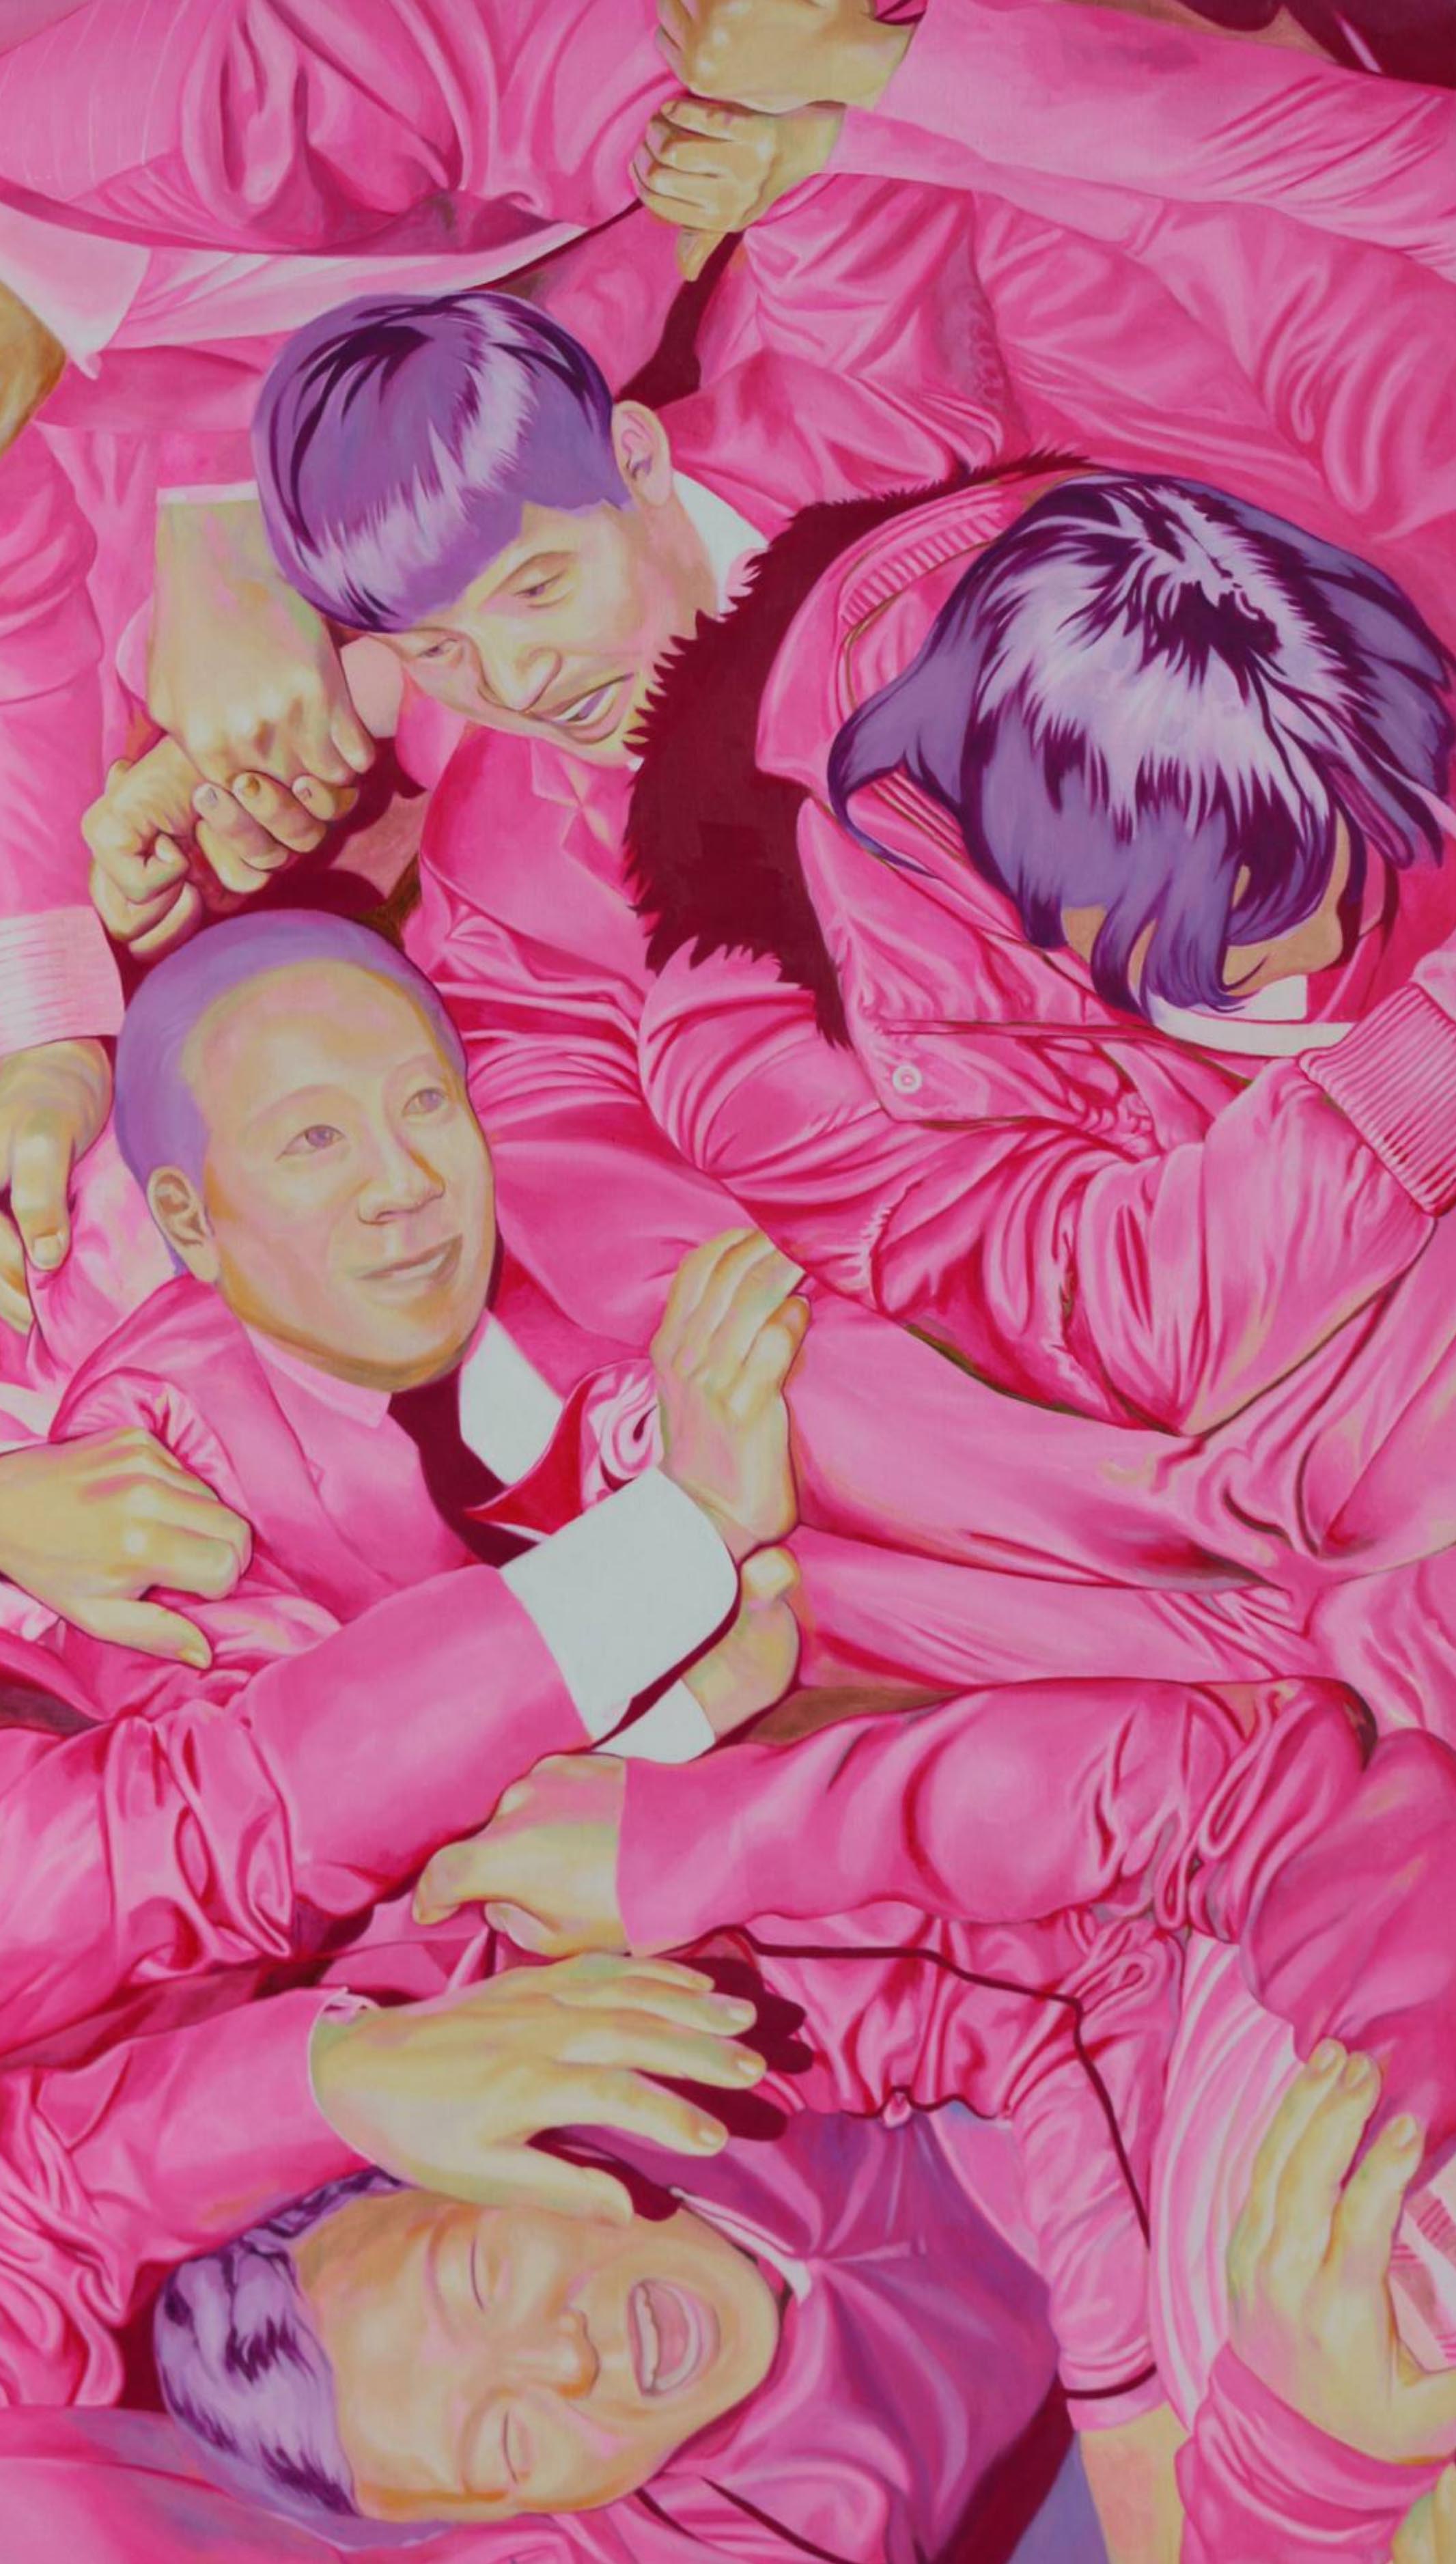 Su hyun Kim, Pink tide, 2016, oil on canvas, 162 x 110 cm